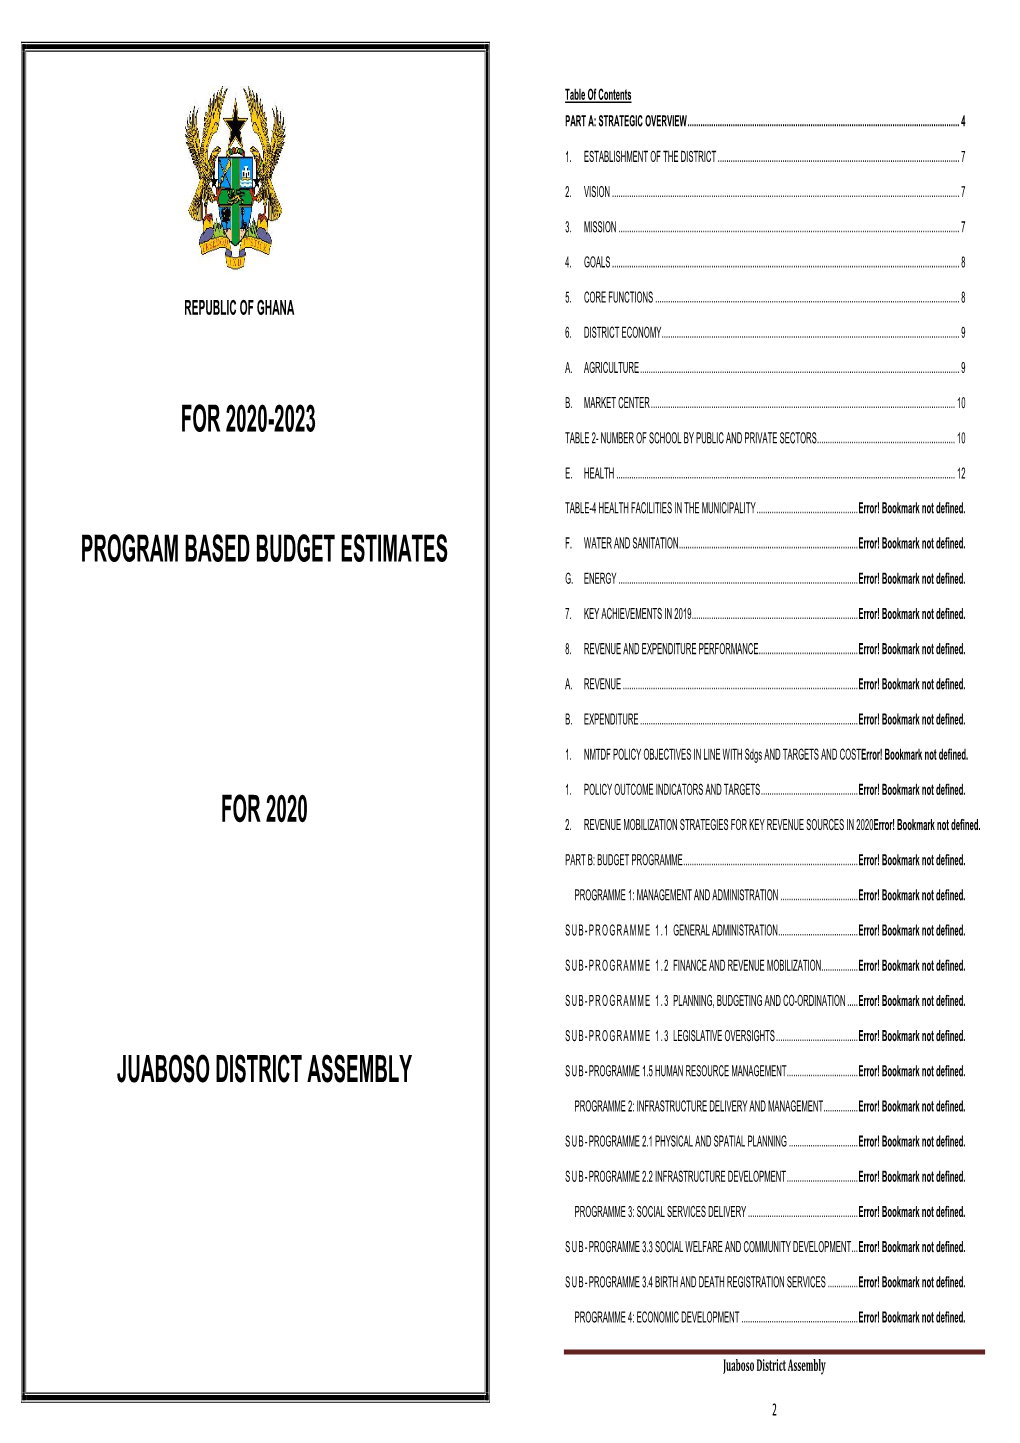 Juaboso District Assembly Sub - Programme 1.5 Human Resource Management